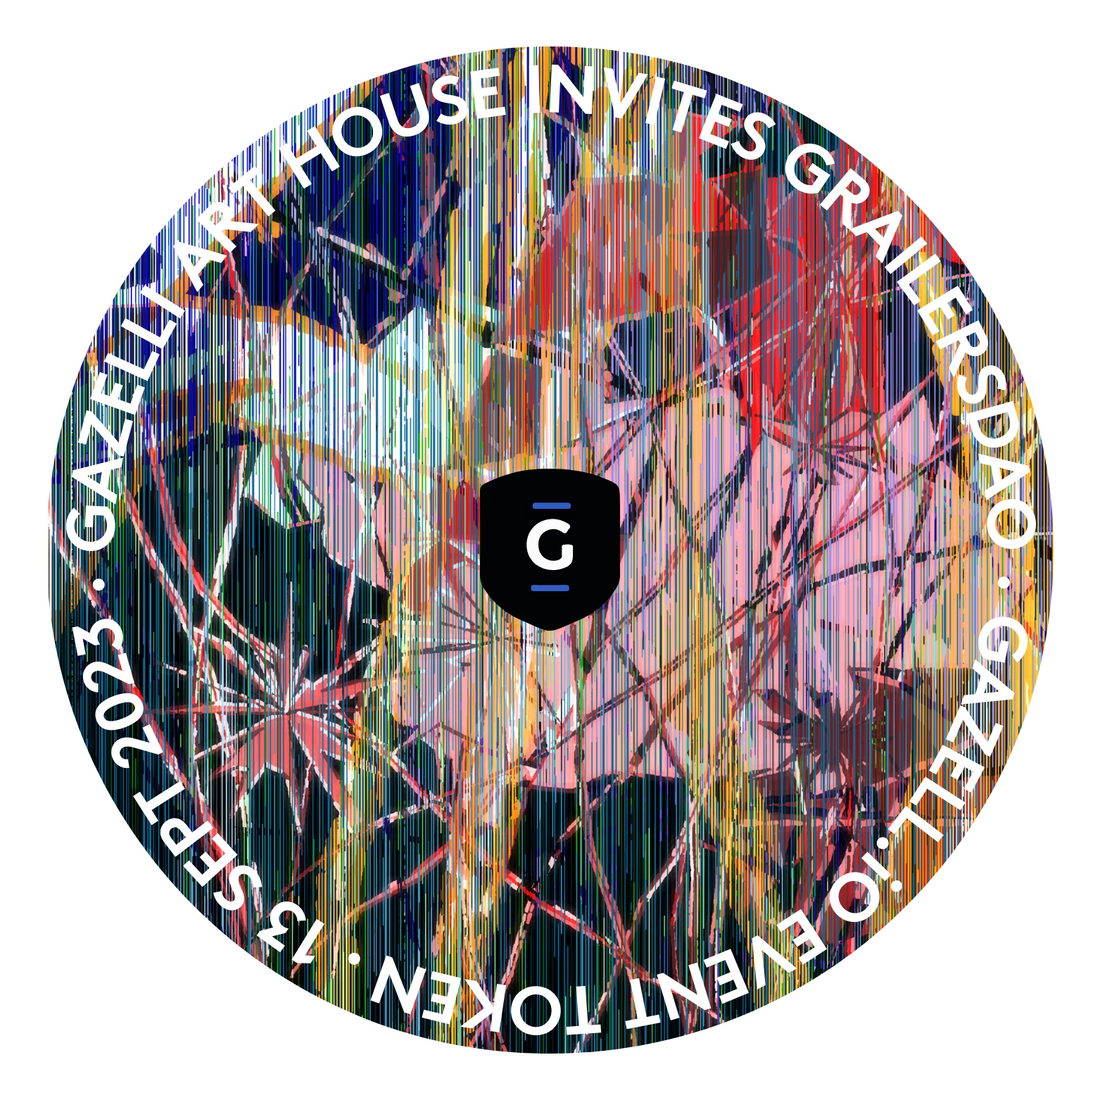 Gazelli Art House invites GrailersDAO